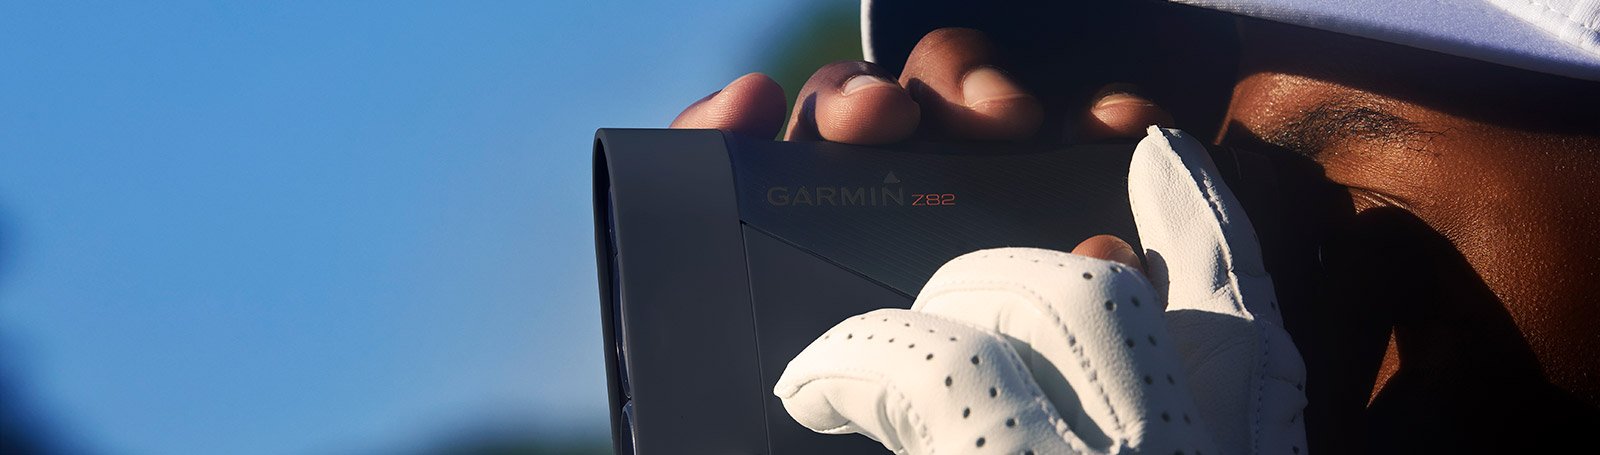 garmin-approach-z82-garmin-golf-camera-golf-1